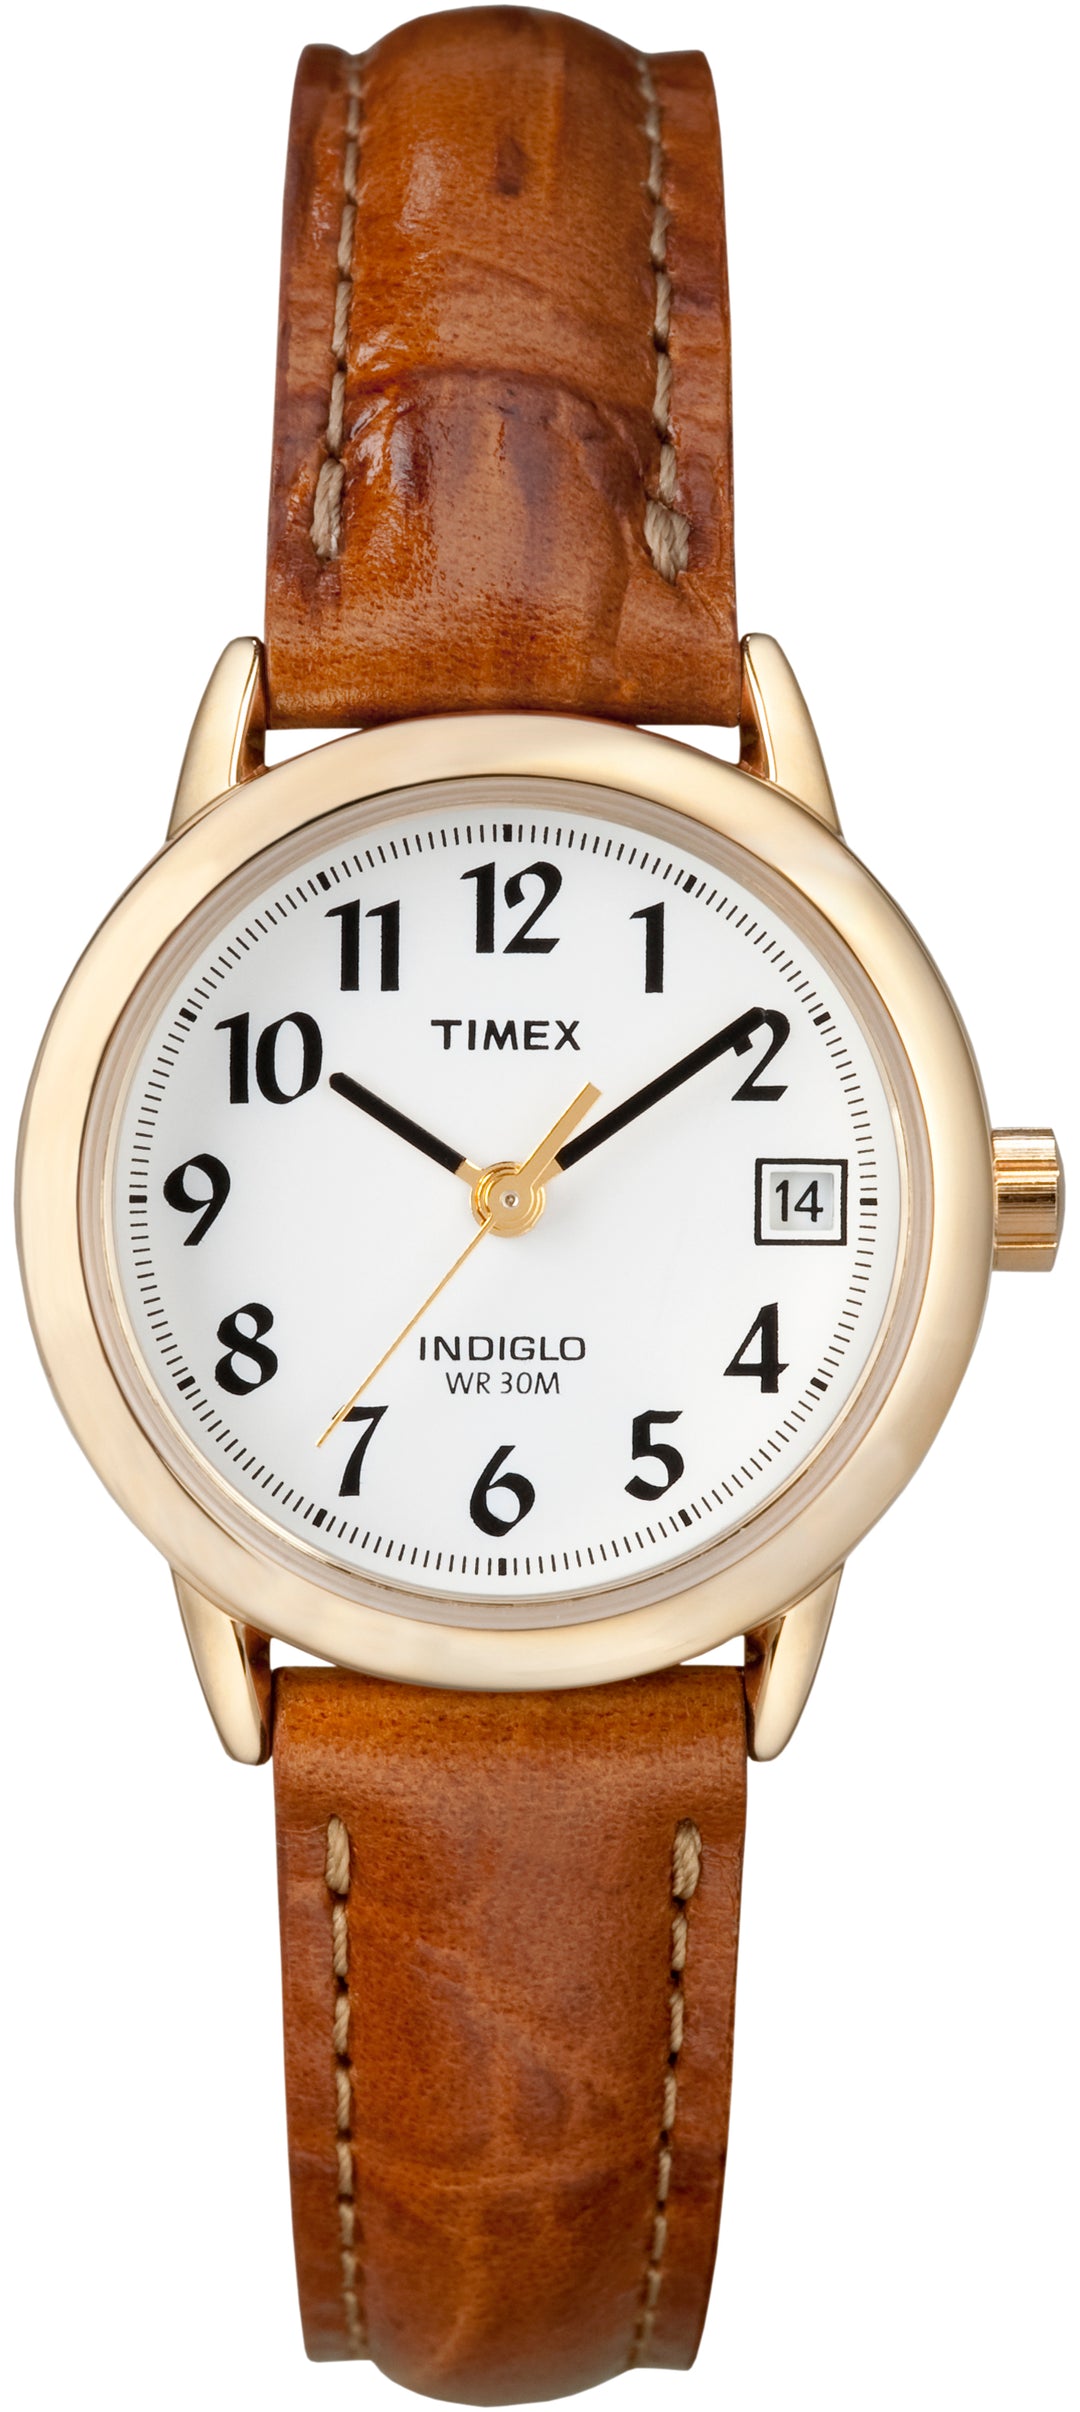 Timex Easy Reader Analog Watch